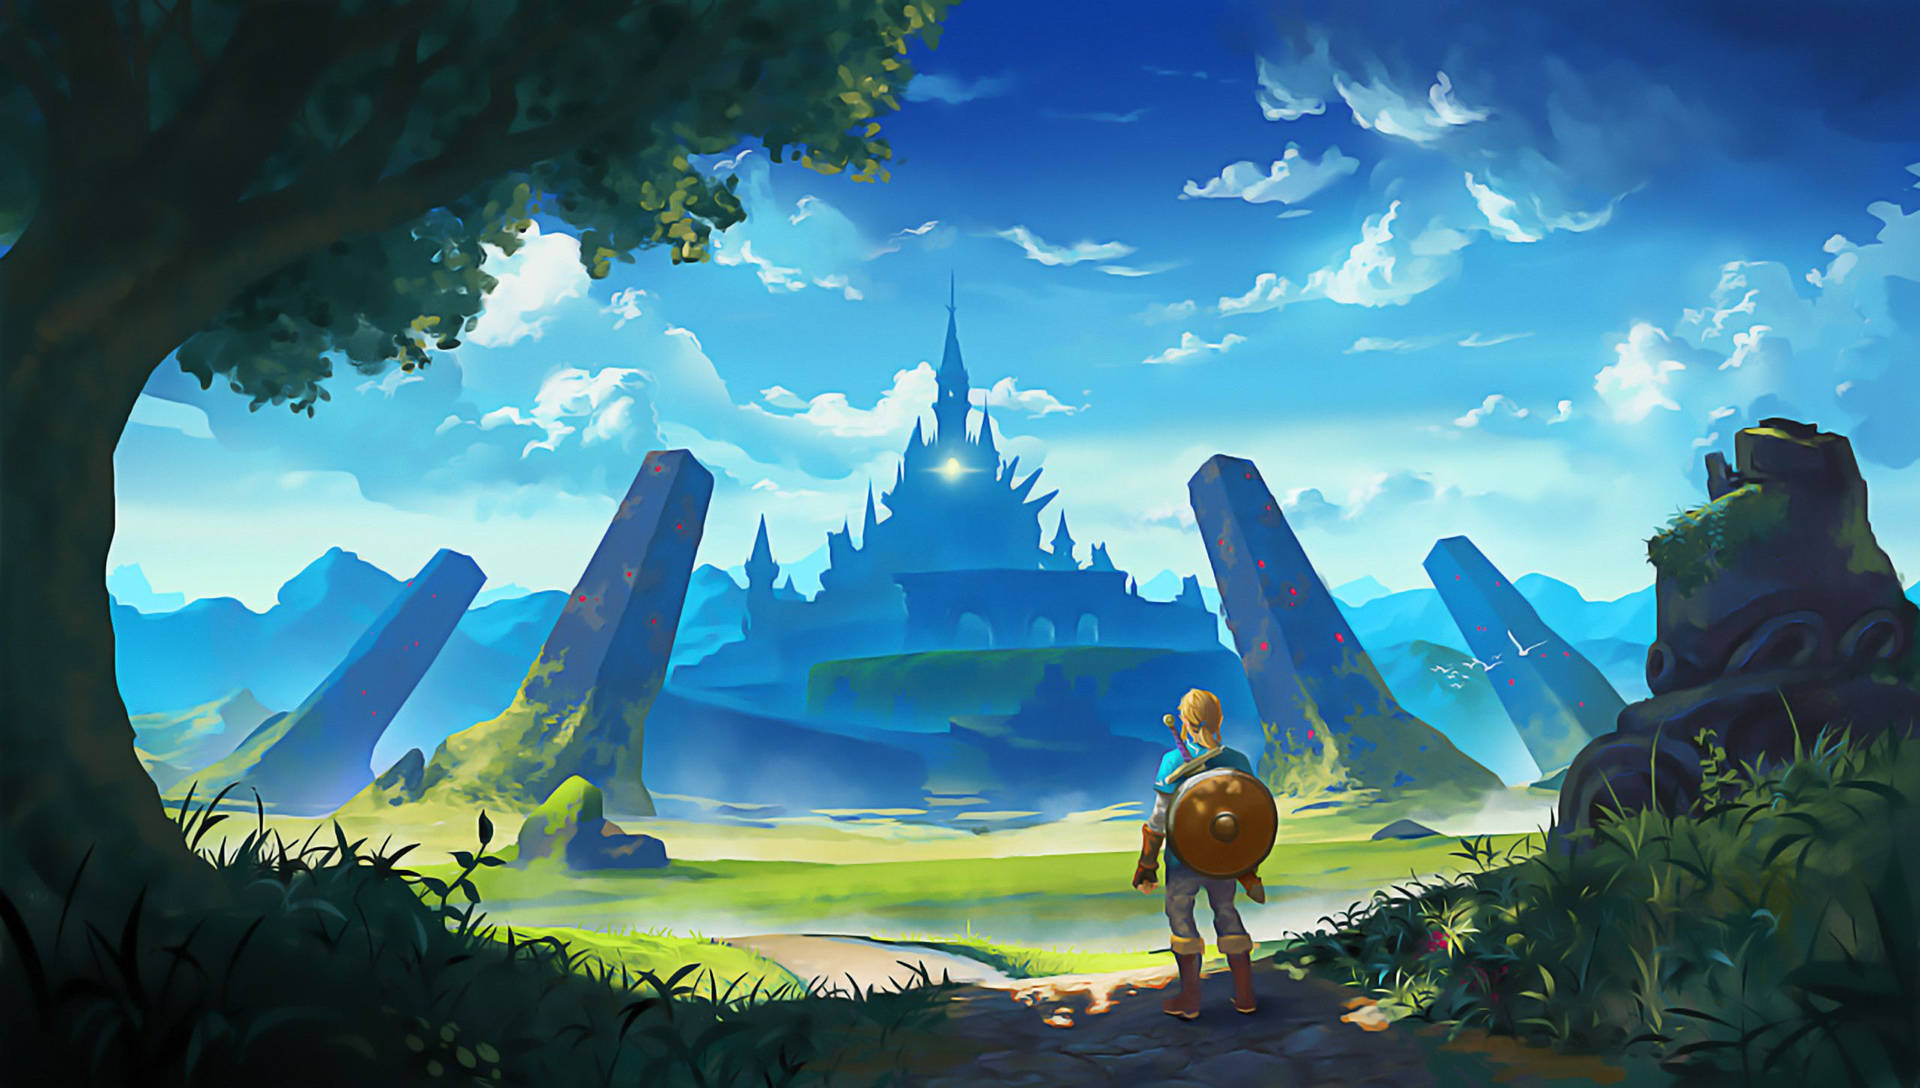 Zelda 2560X1451 Wallpaper and Background Image